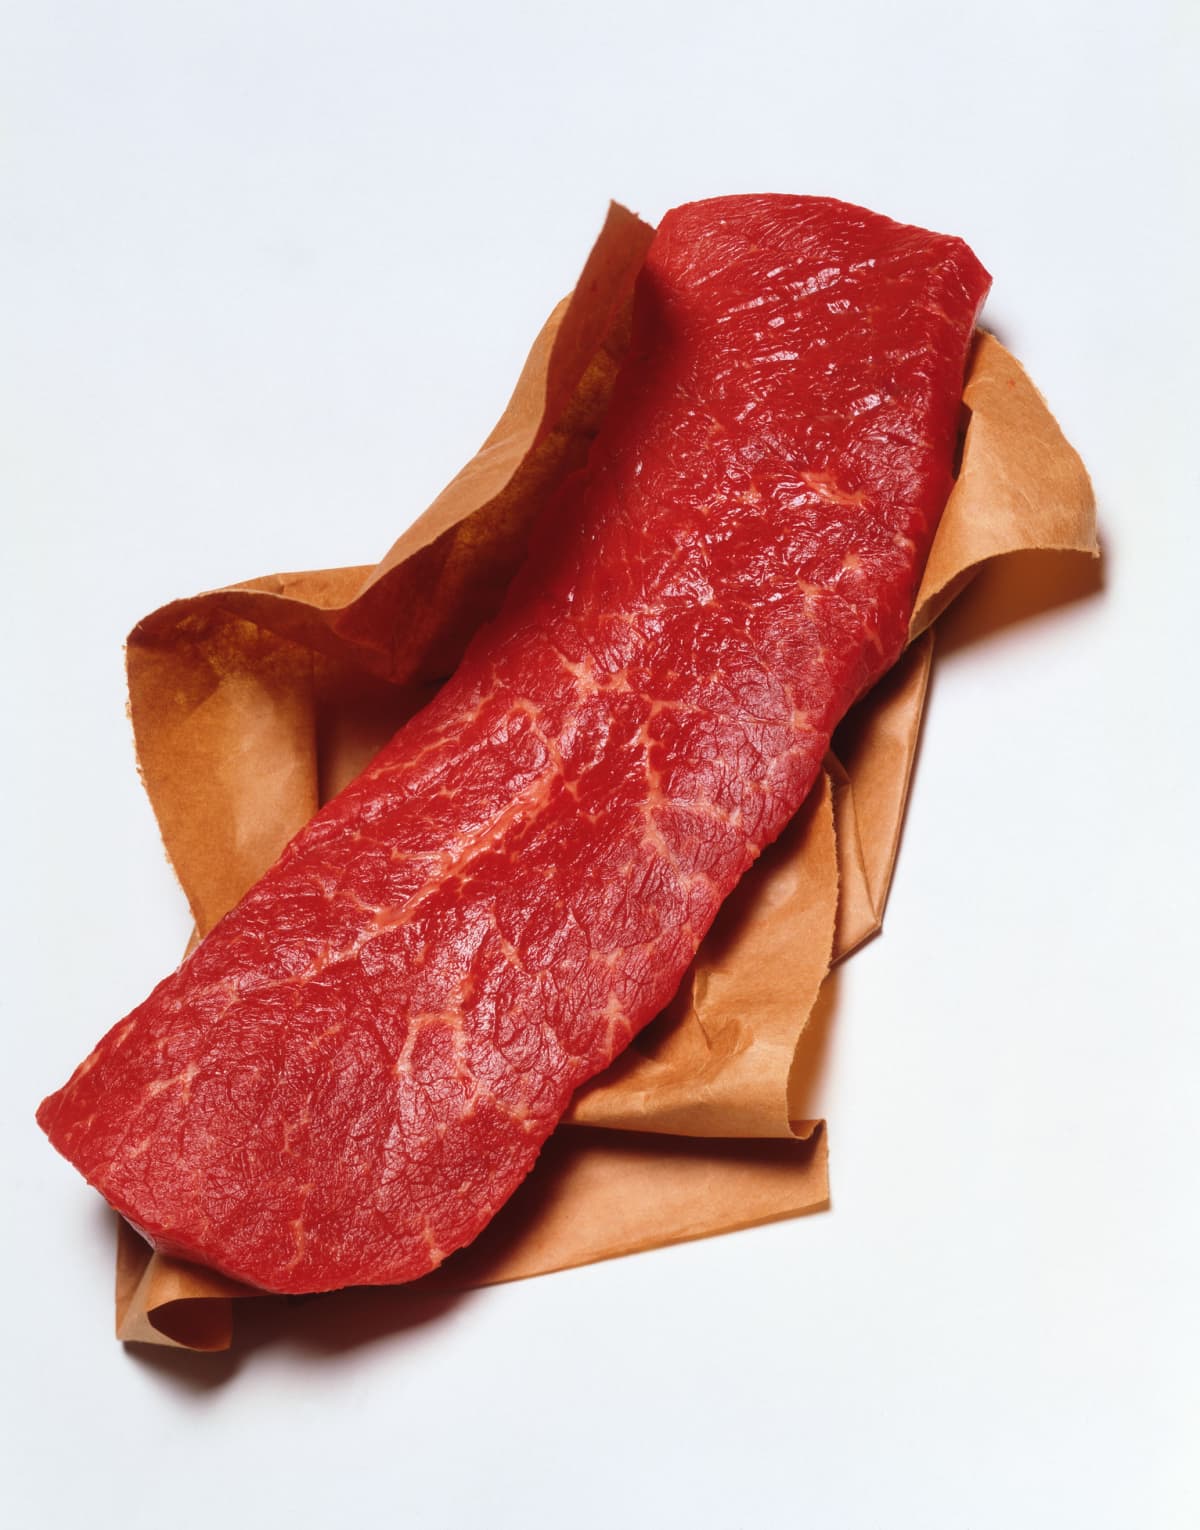 Raw skirt steak on brown paper on white background